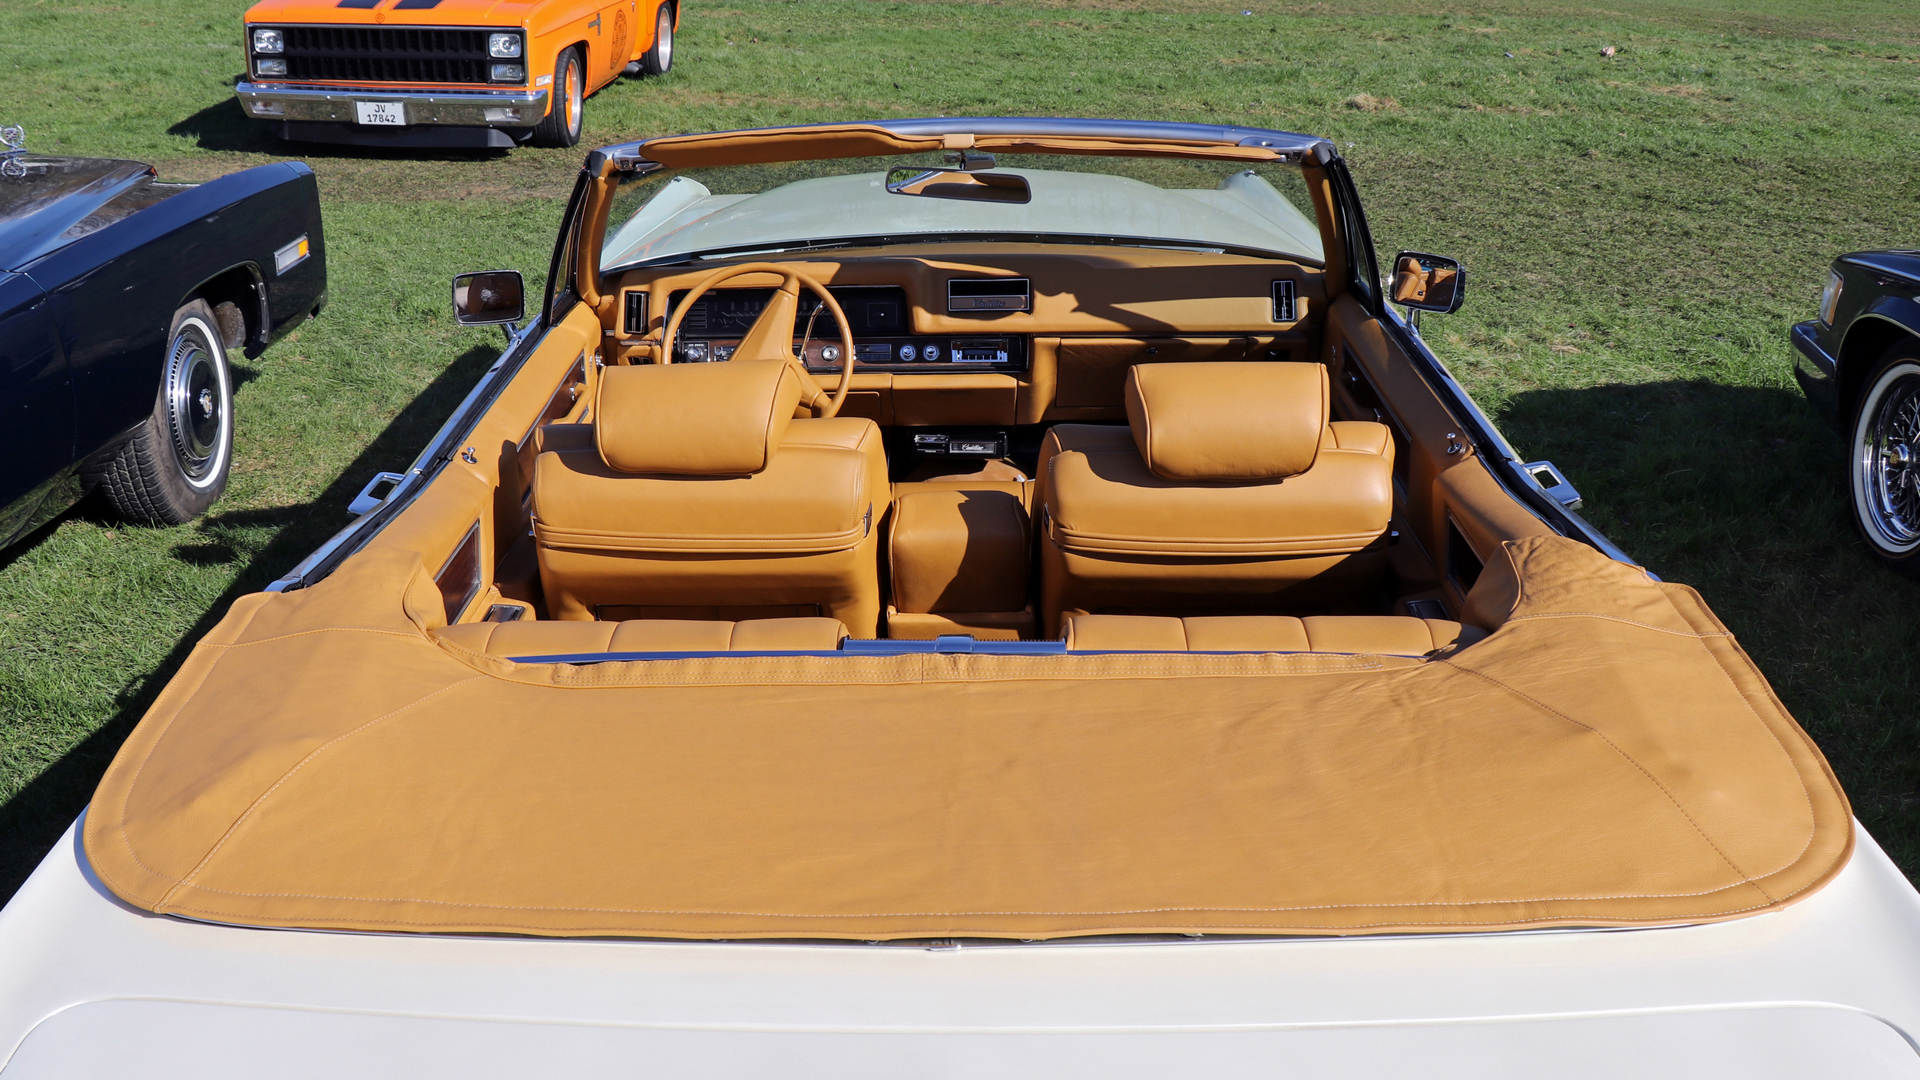 070-1968 Cadillac DeVille convertible 04, Eiere, 0